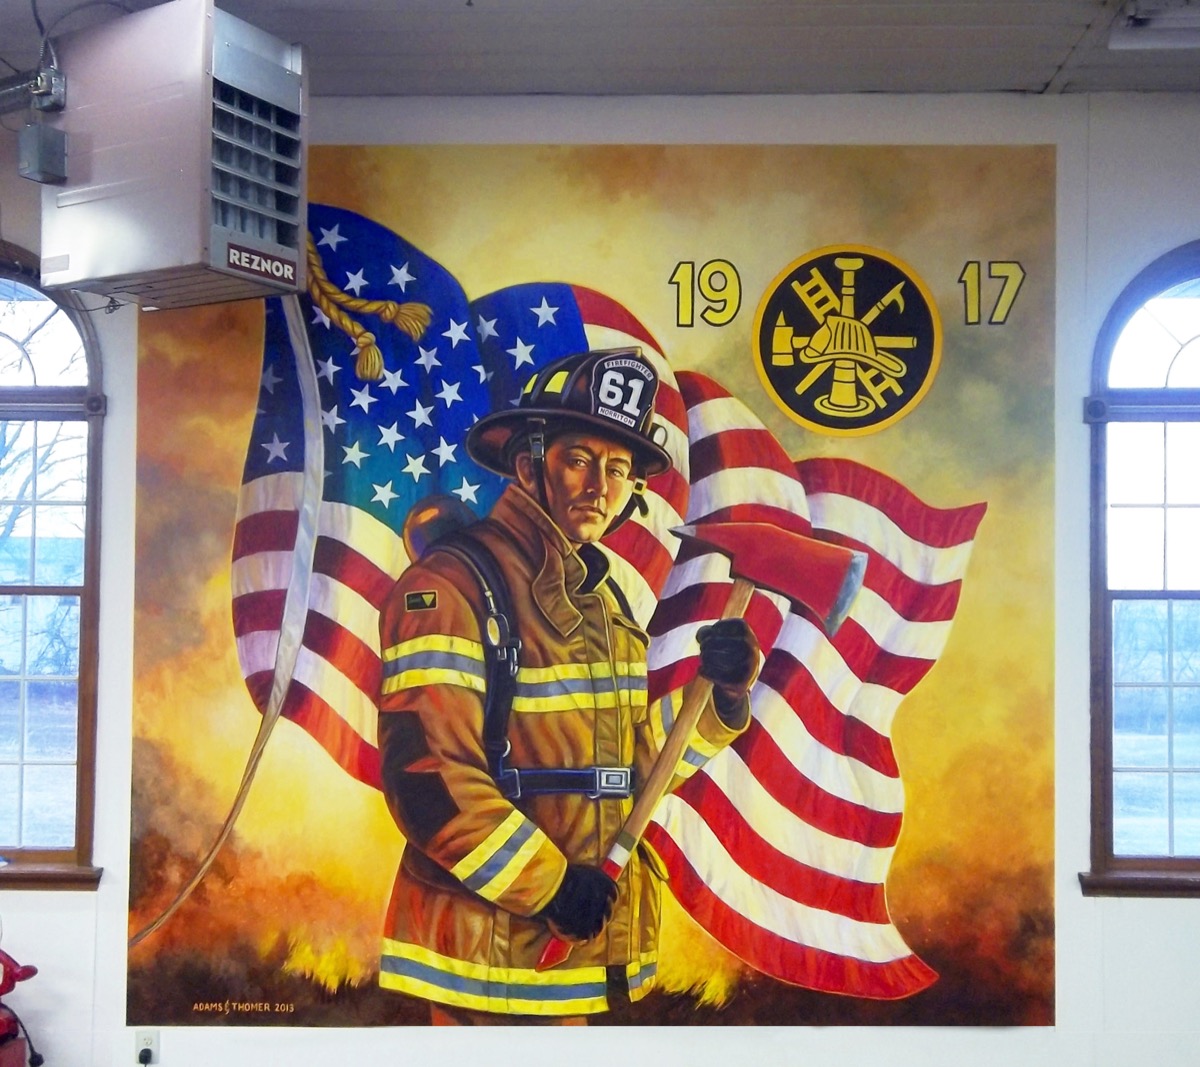 East Norriton Fire Engine Co. Sub Station 61-B